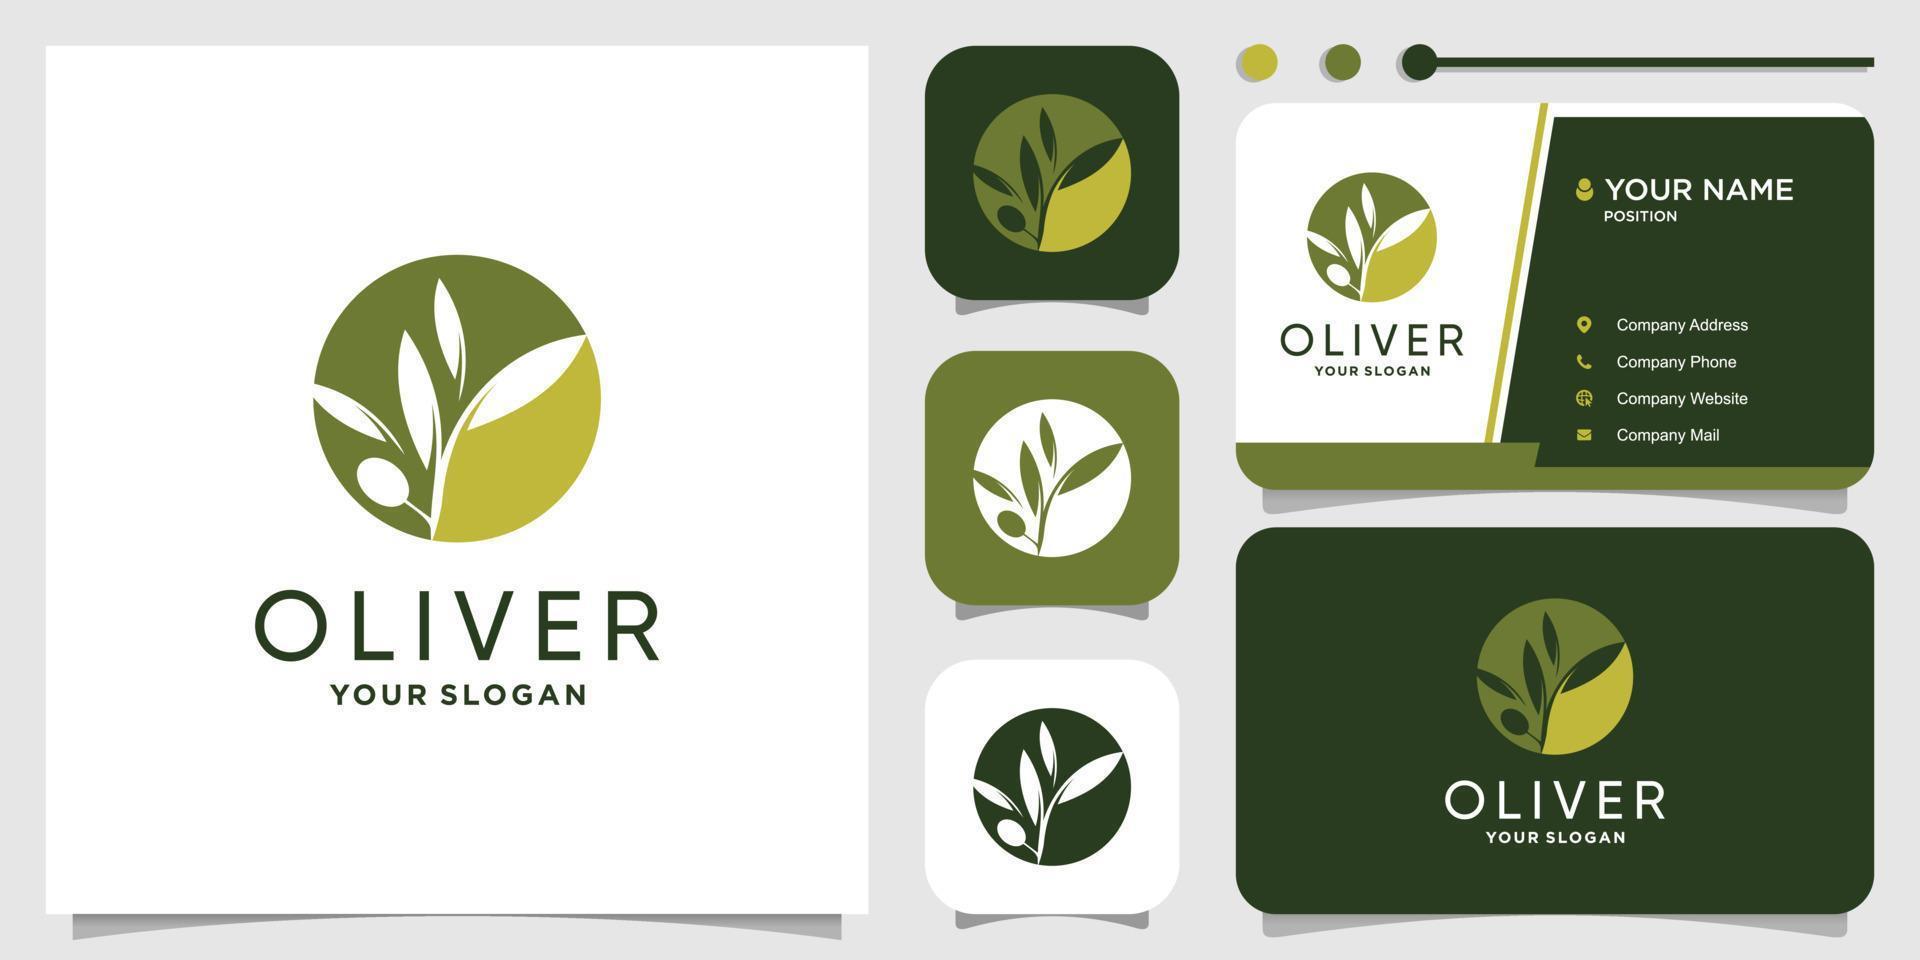 conceito de logotipo oliver com vetor premium de estilo abstrato criativo